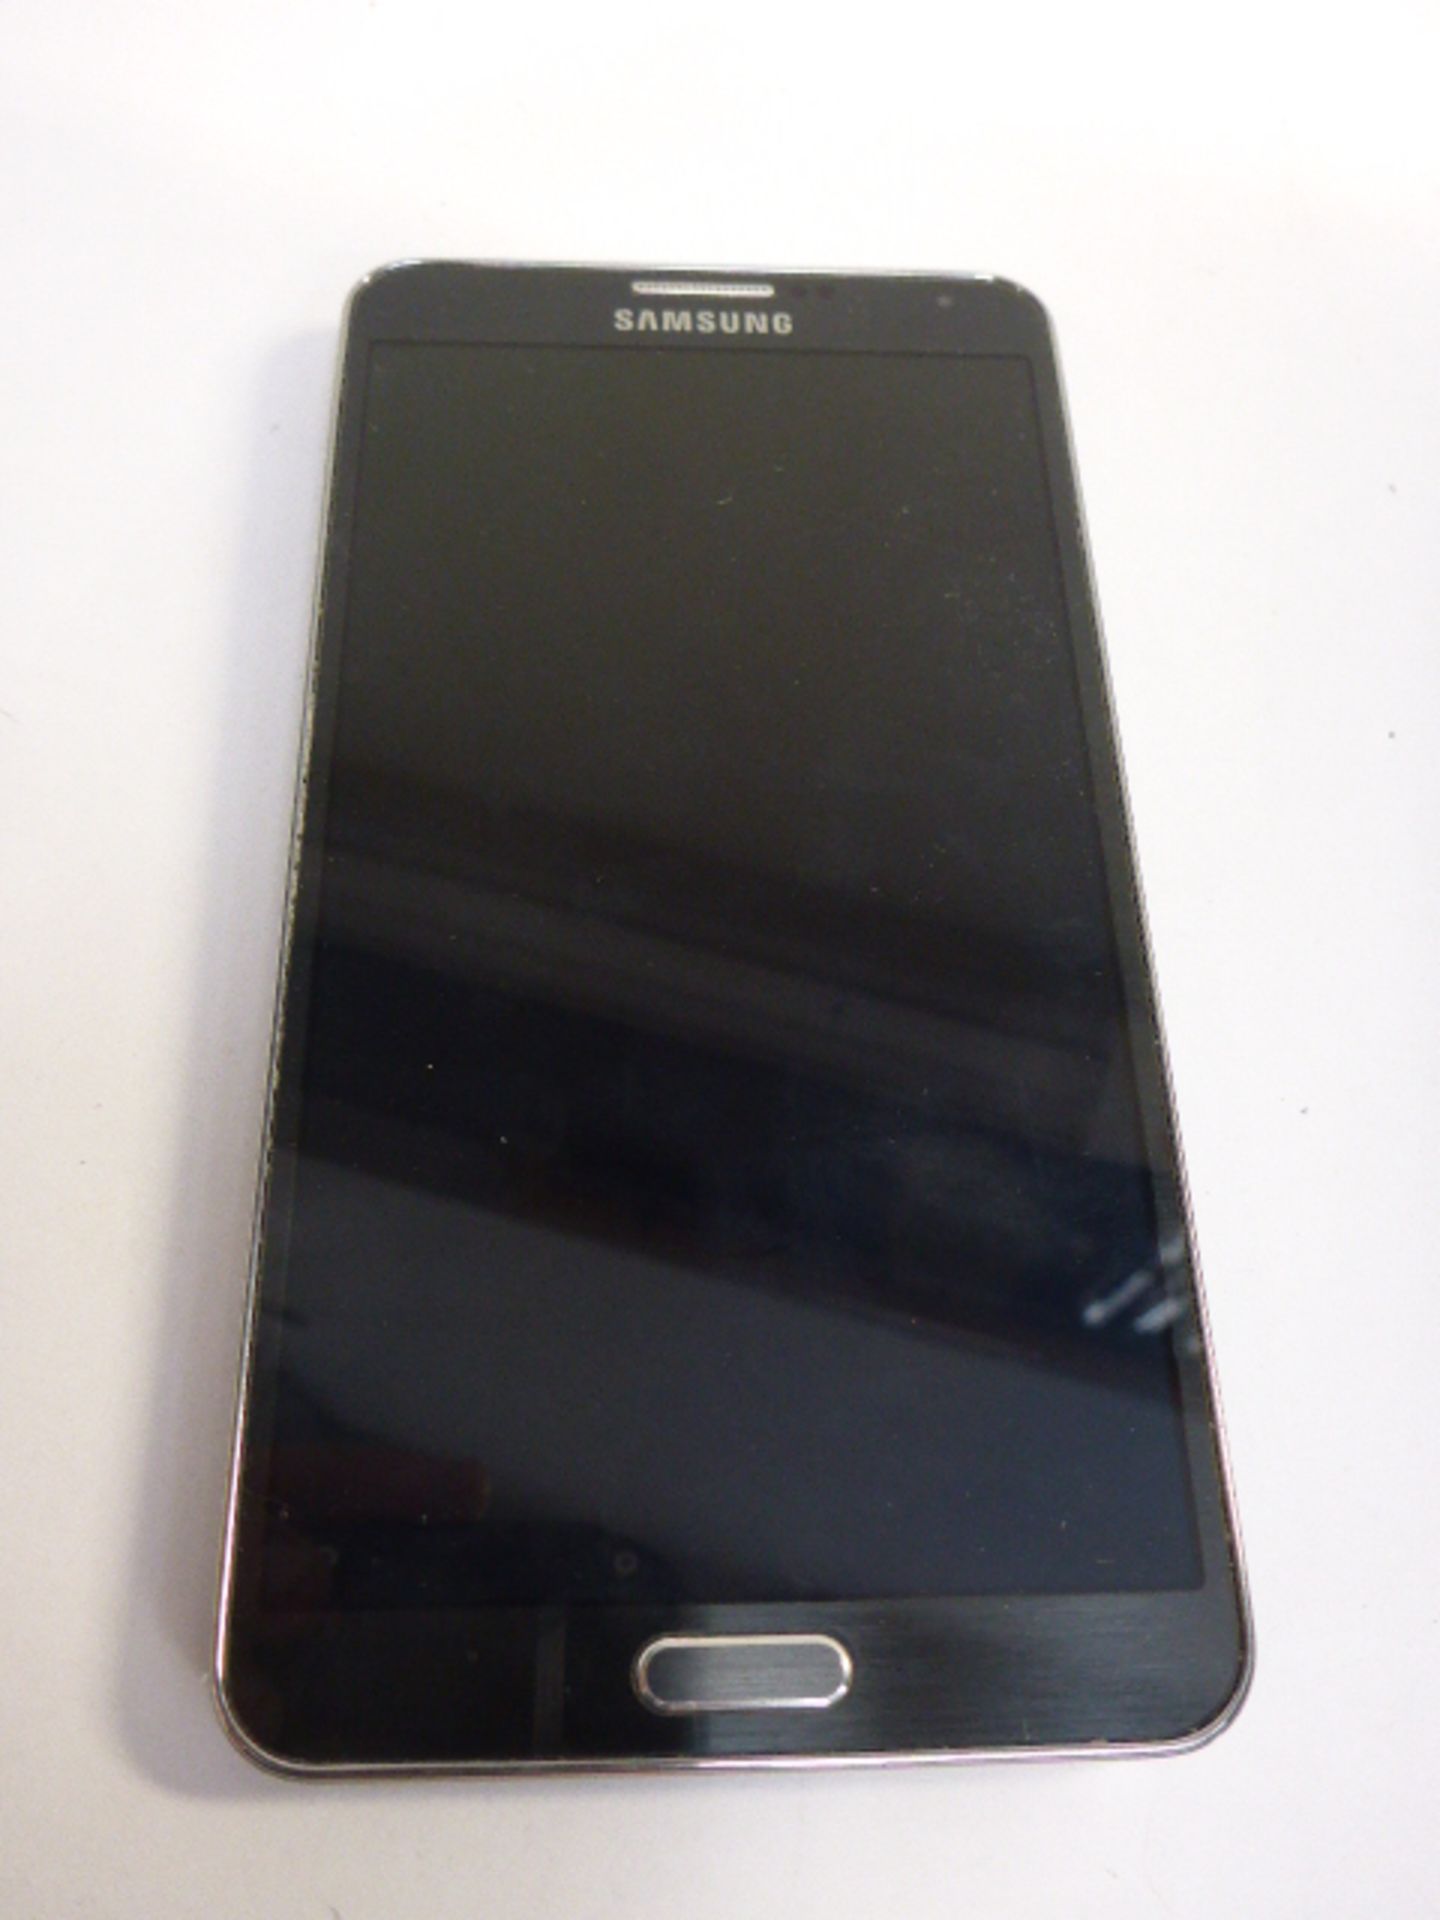 Samsung Galaxy Note 32GB smartphone